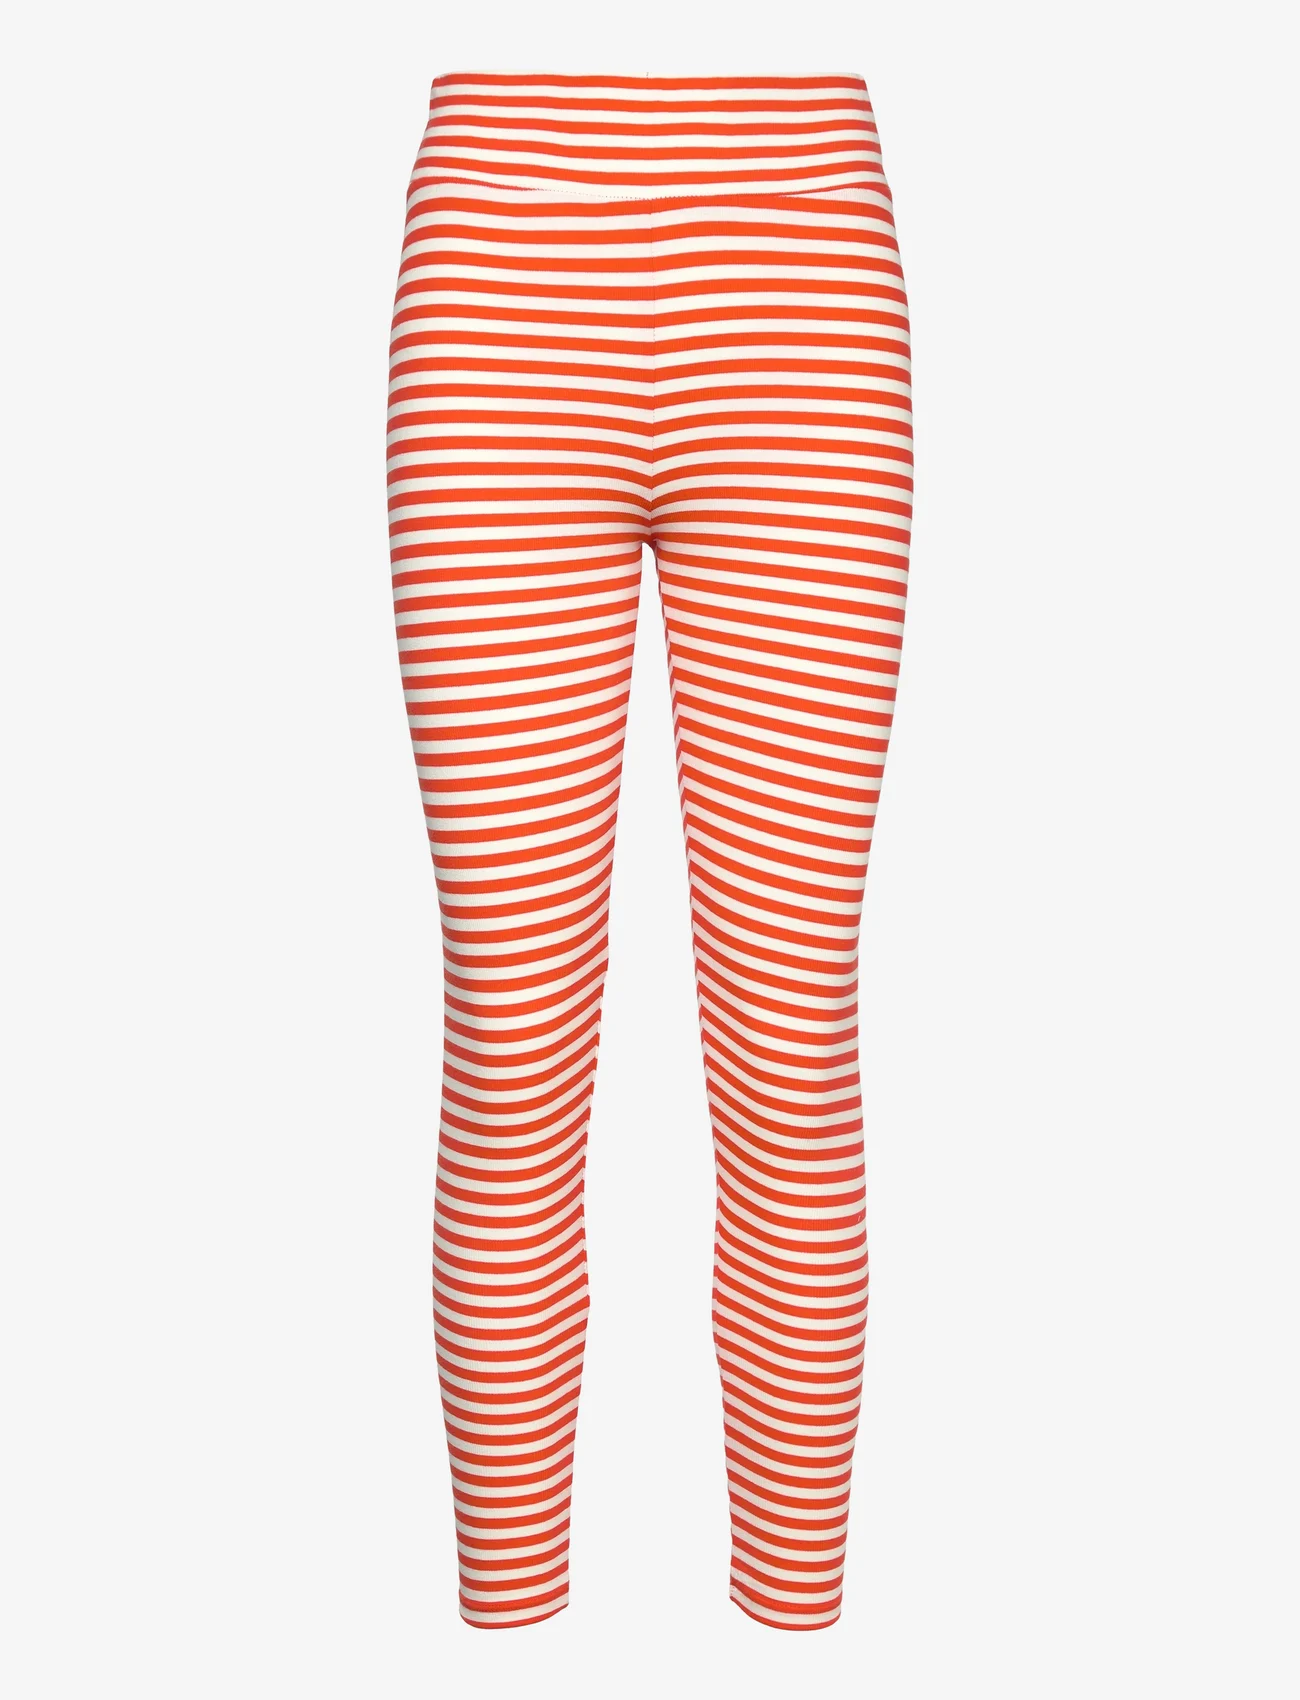 Basic Apparel - Ludmilla Tights GOTS - leggings - spicy orange/whisper white - 0